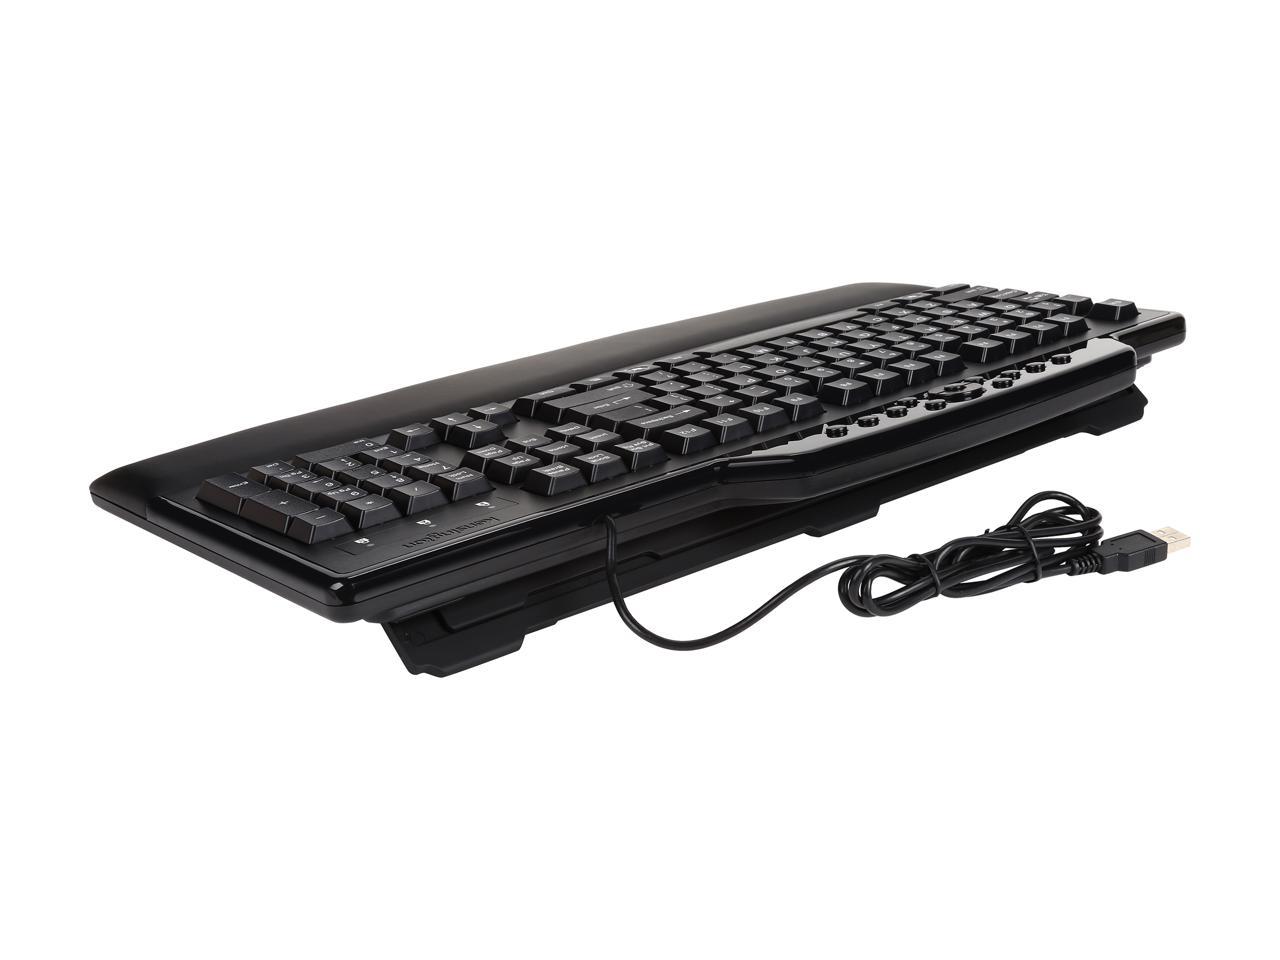 Kensington K72402US Black USB Wired Ergonomic Pro Fit Comfort Keyboard